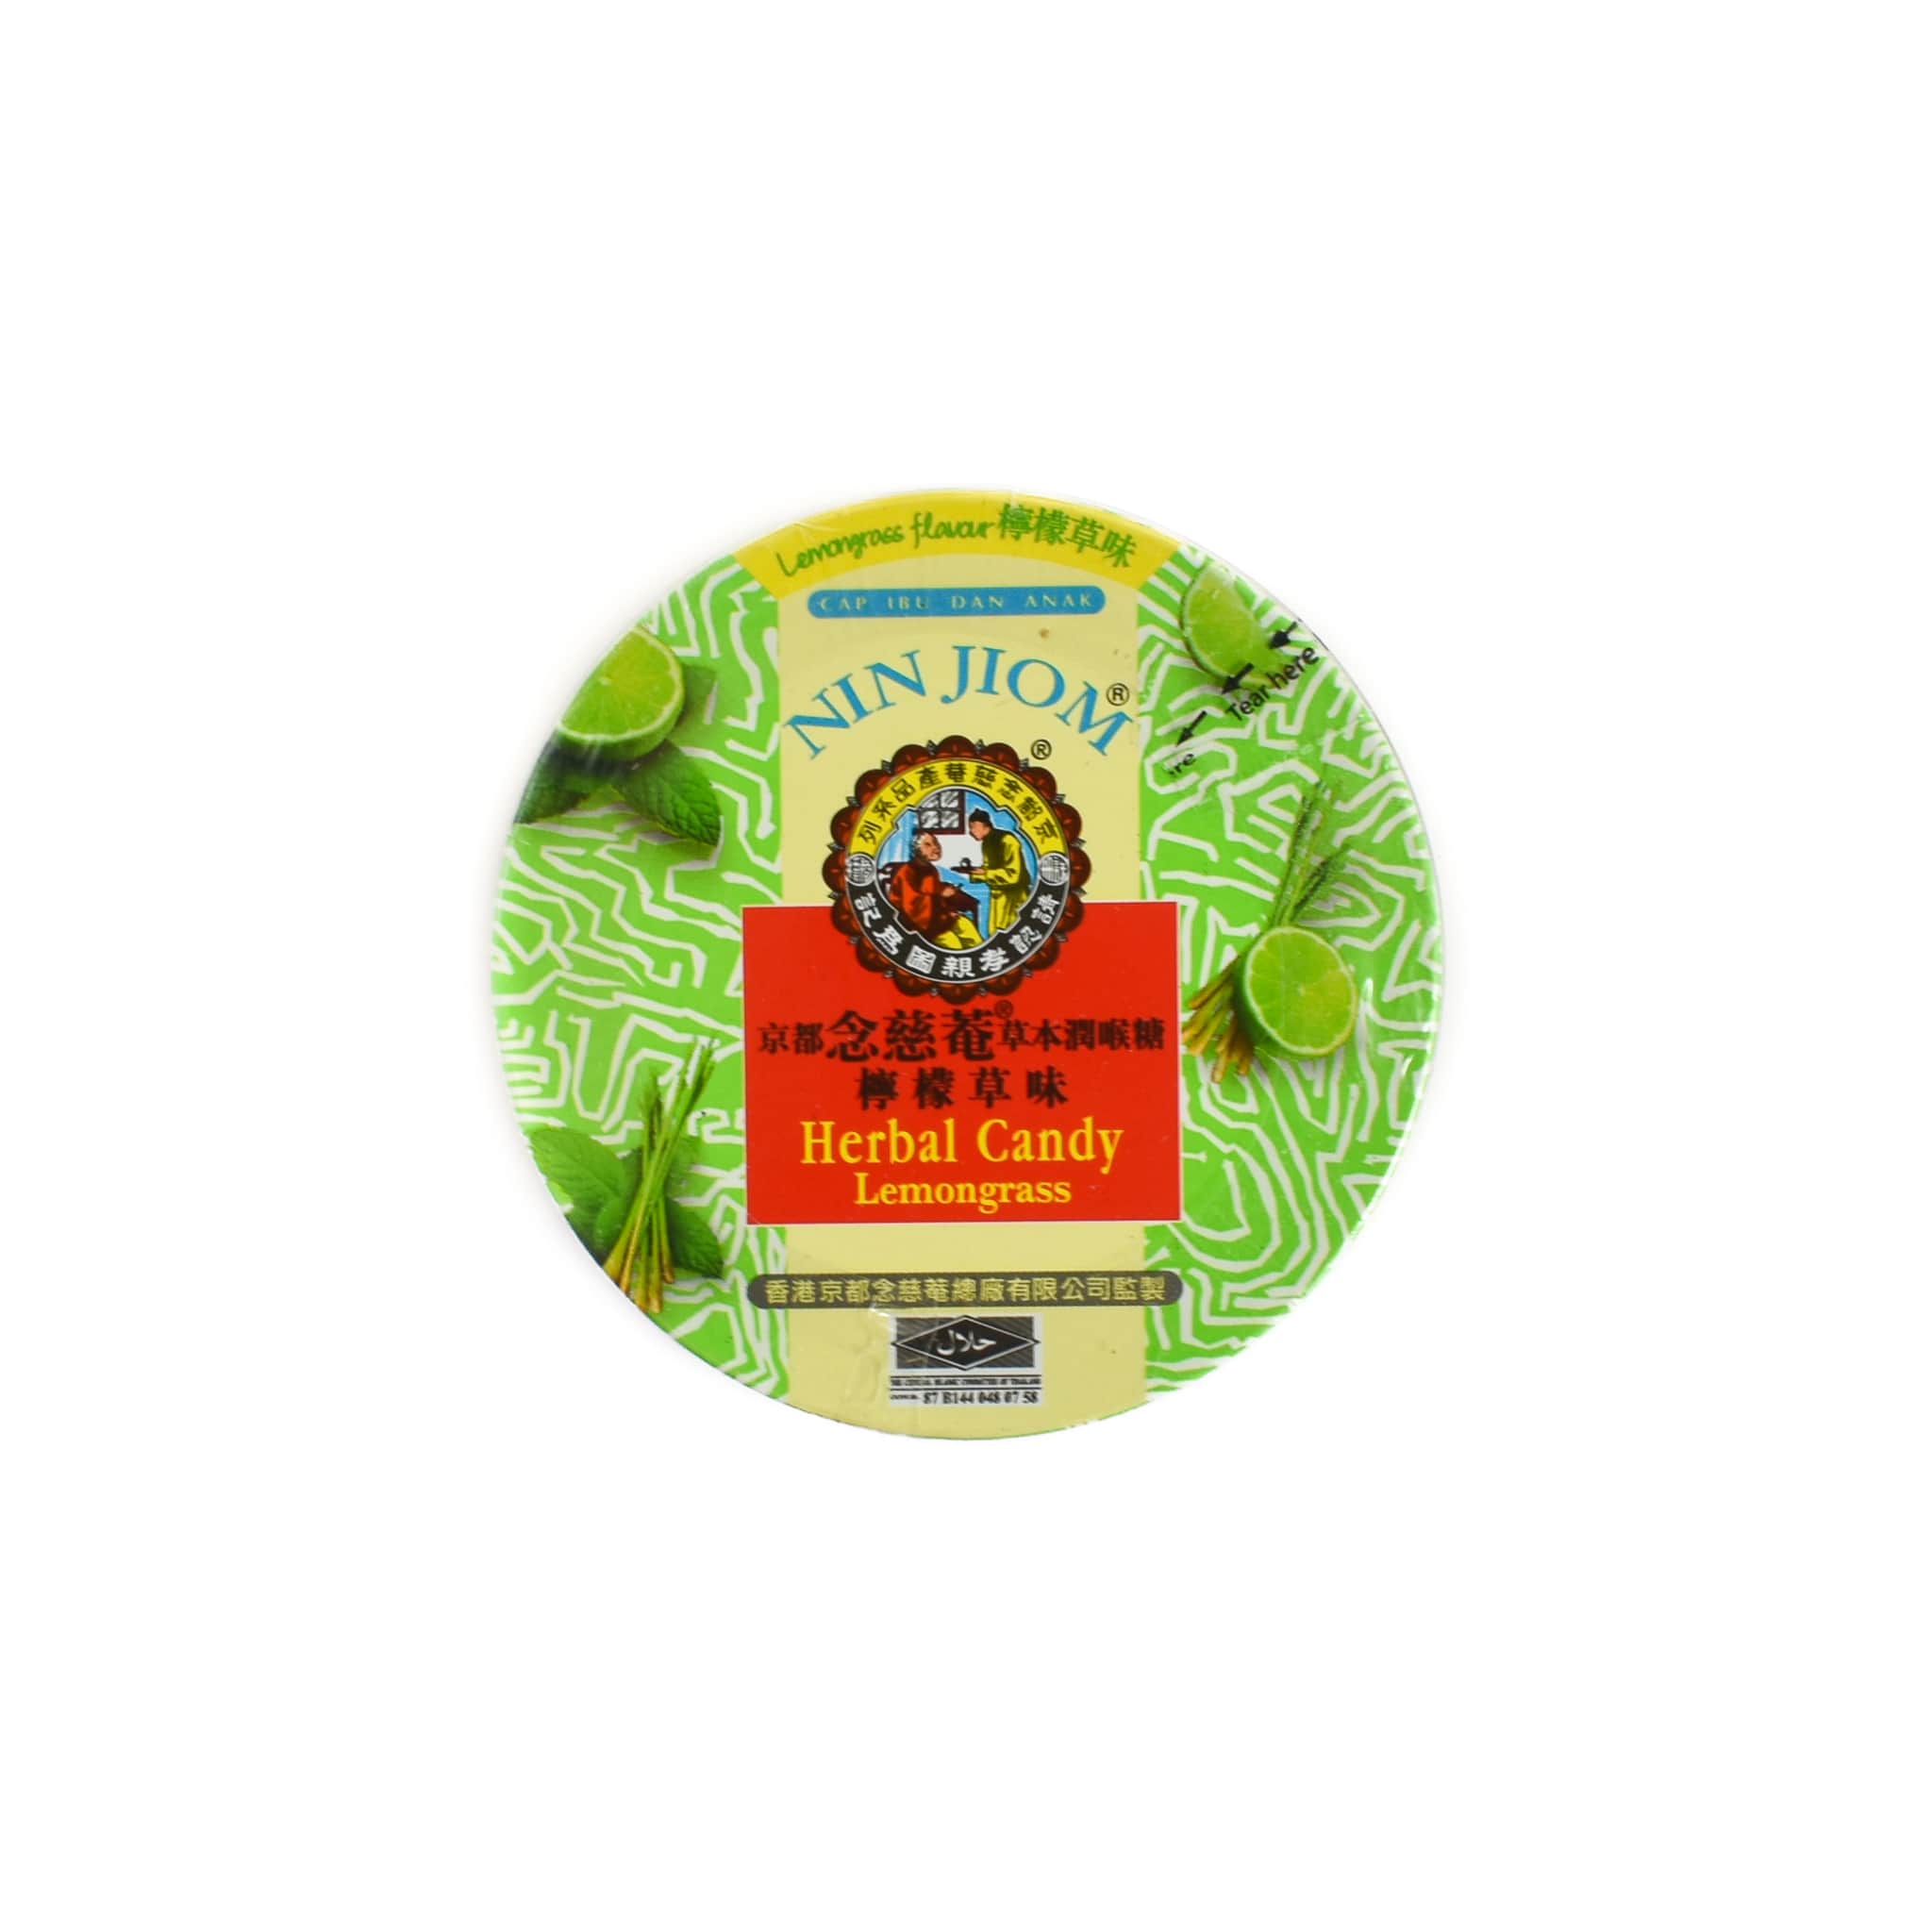 Lemongrass Herbal Candy, 60g